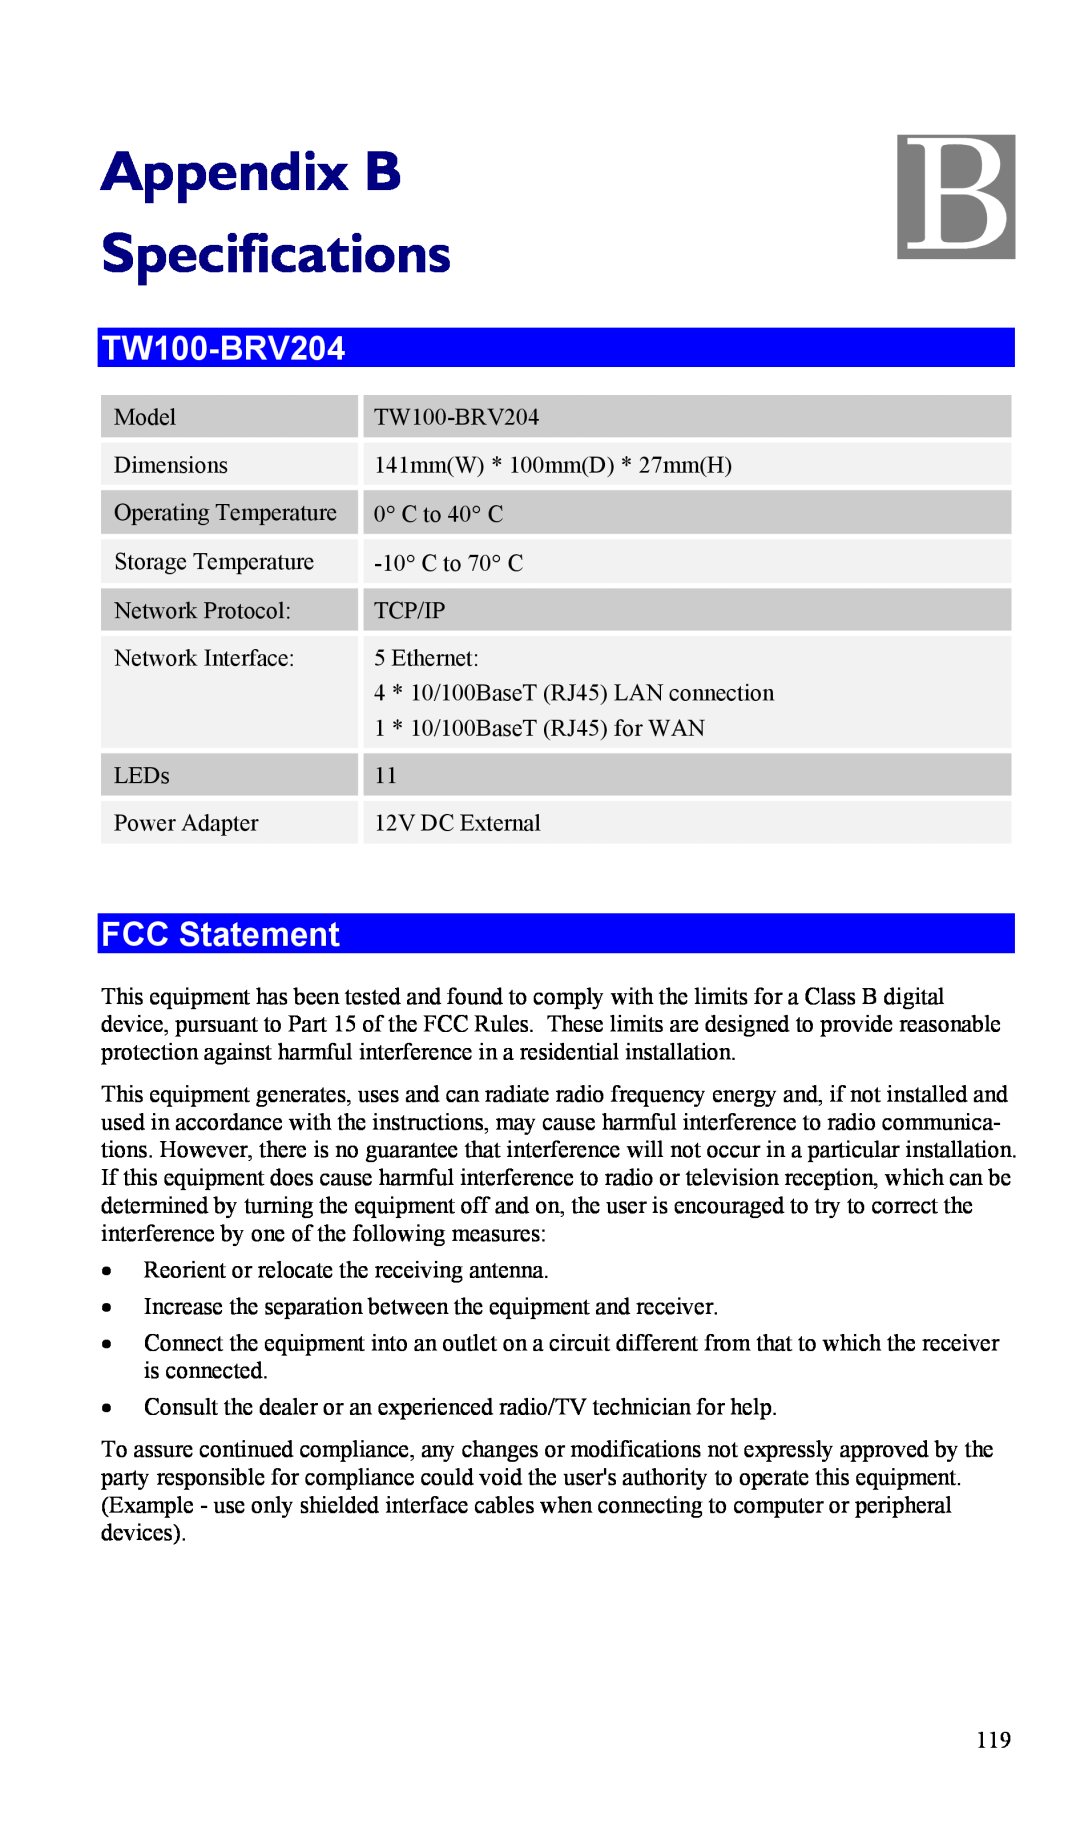 TRENDnet TW100-BRV204, VPN Firewall Router manual FCC Statement, Appendix B Specifications 